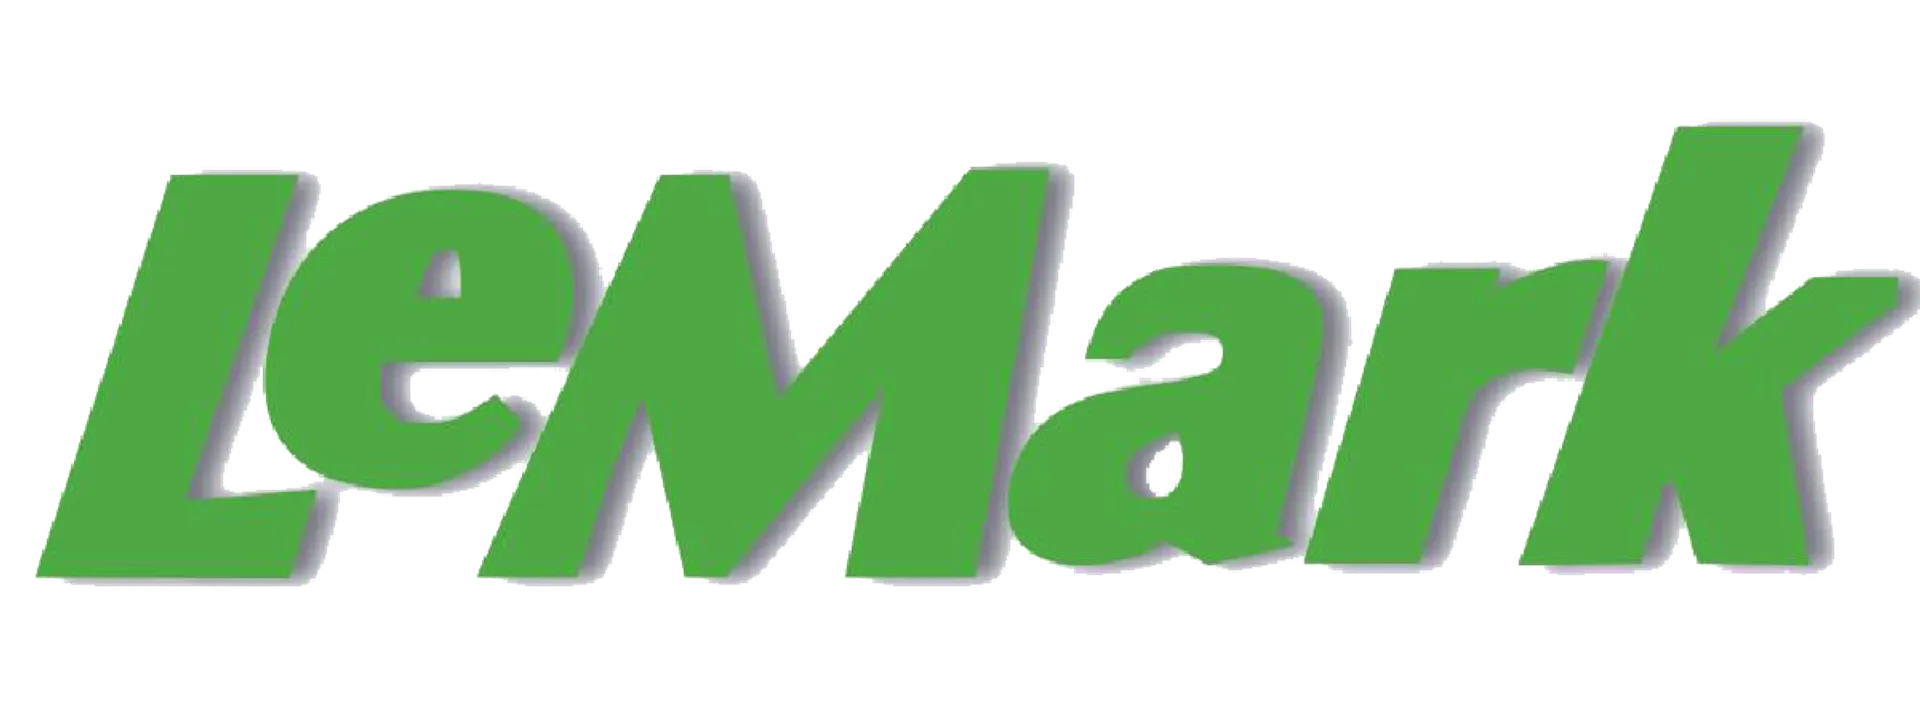 LE MARK logo